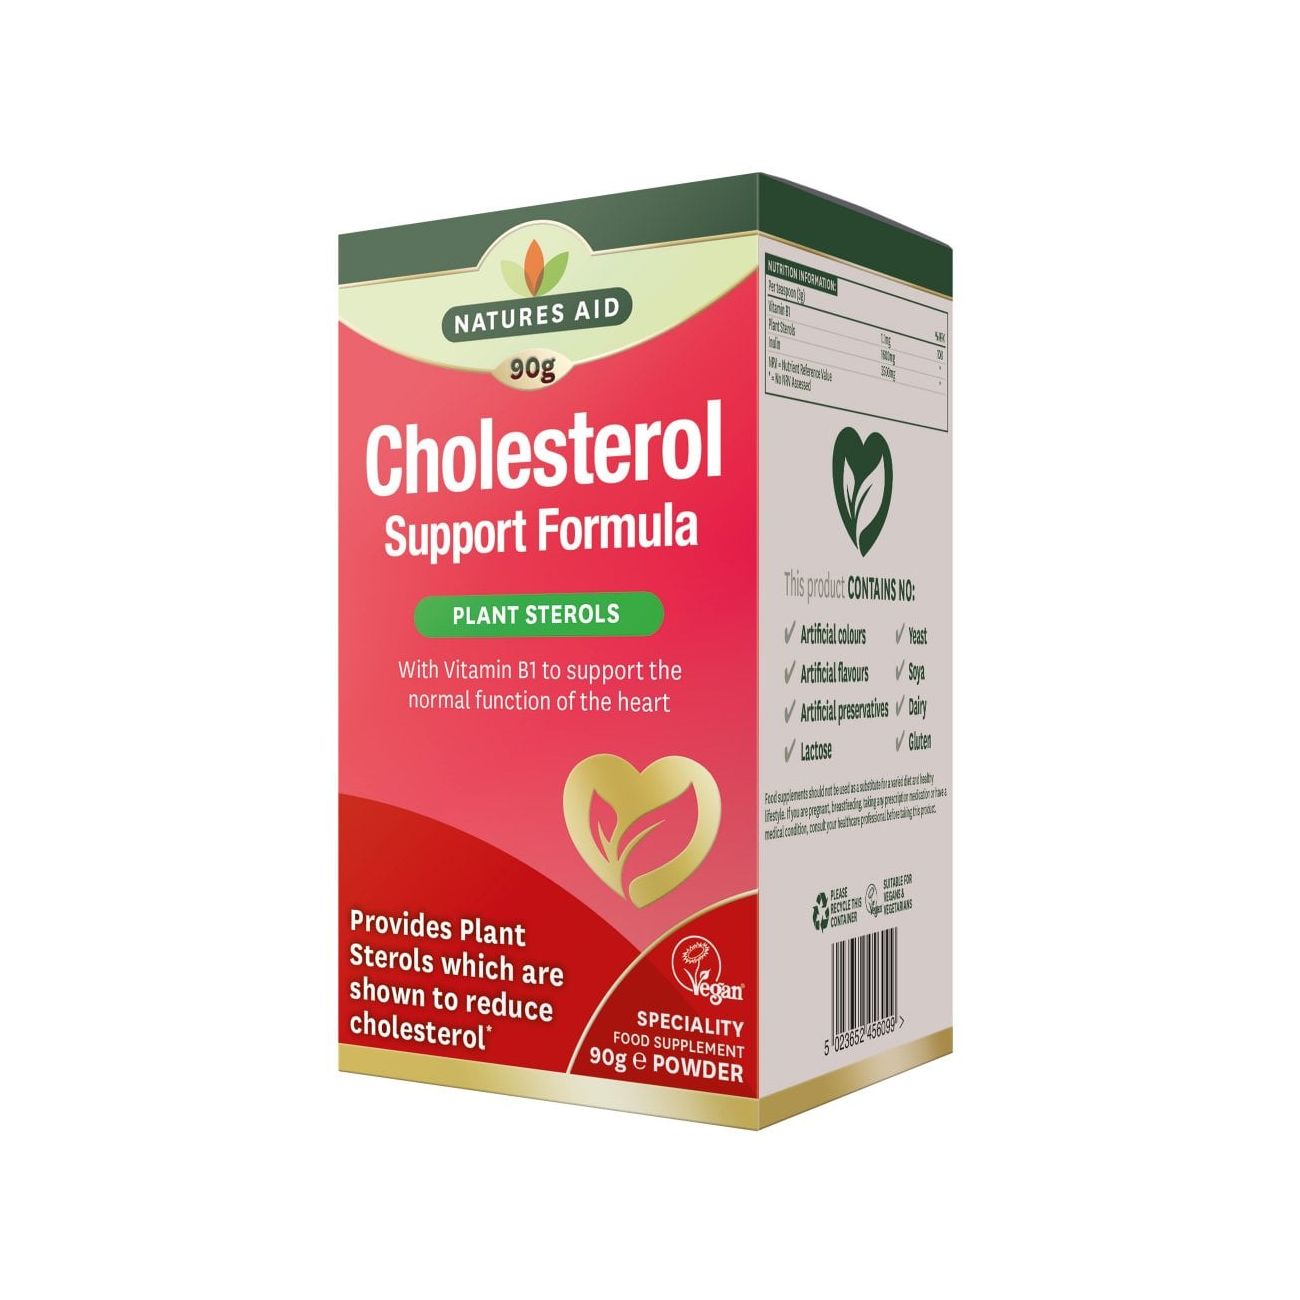 Cholesterol Support Formula 90g